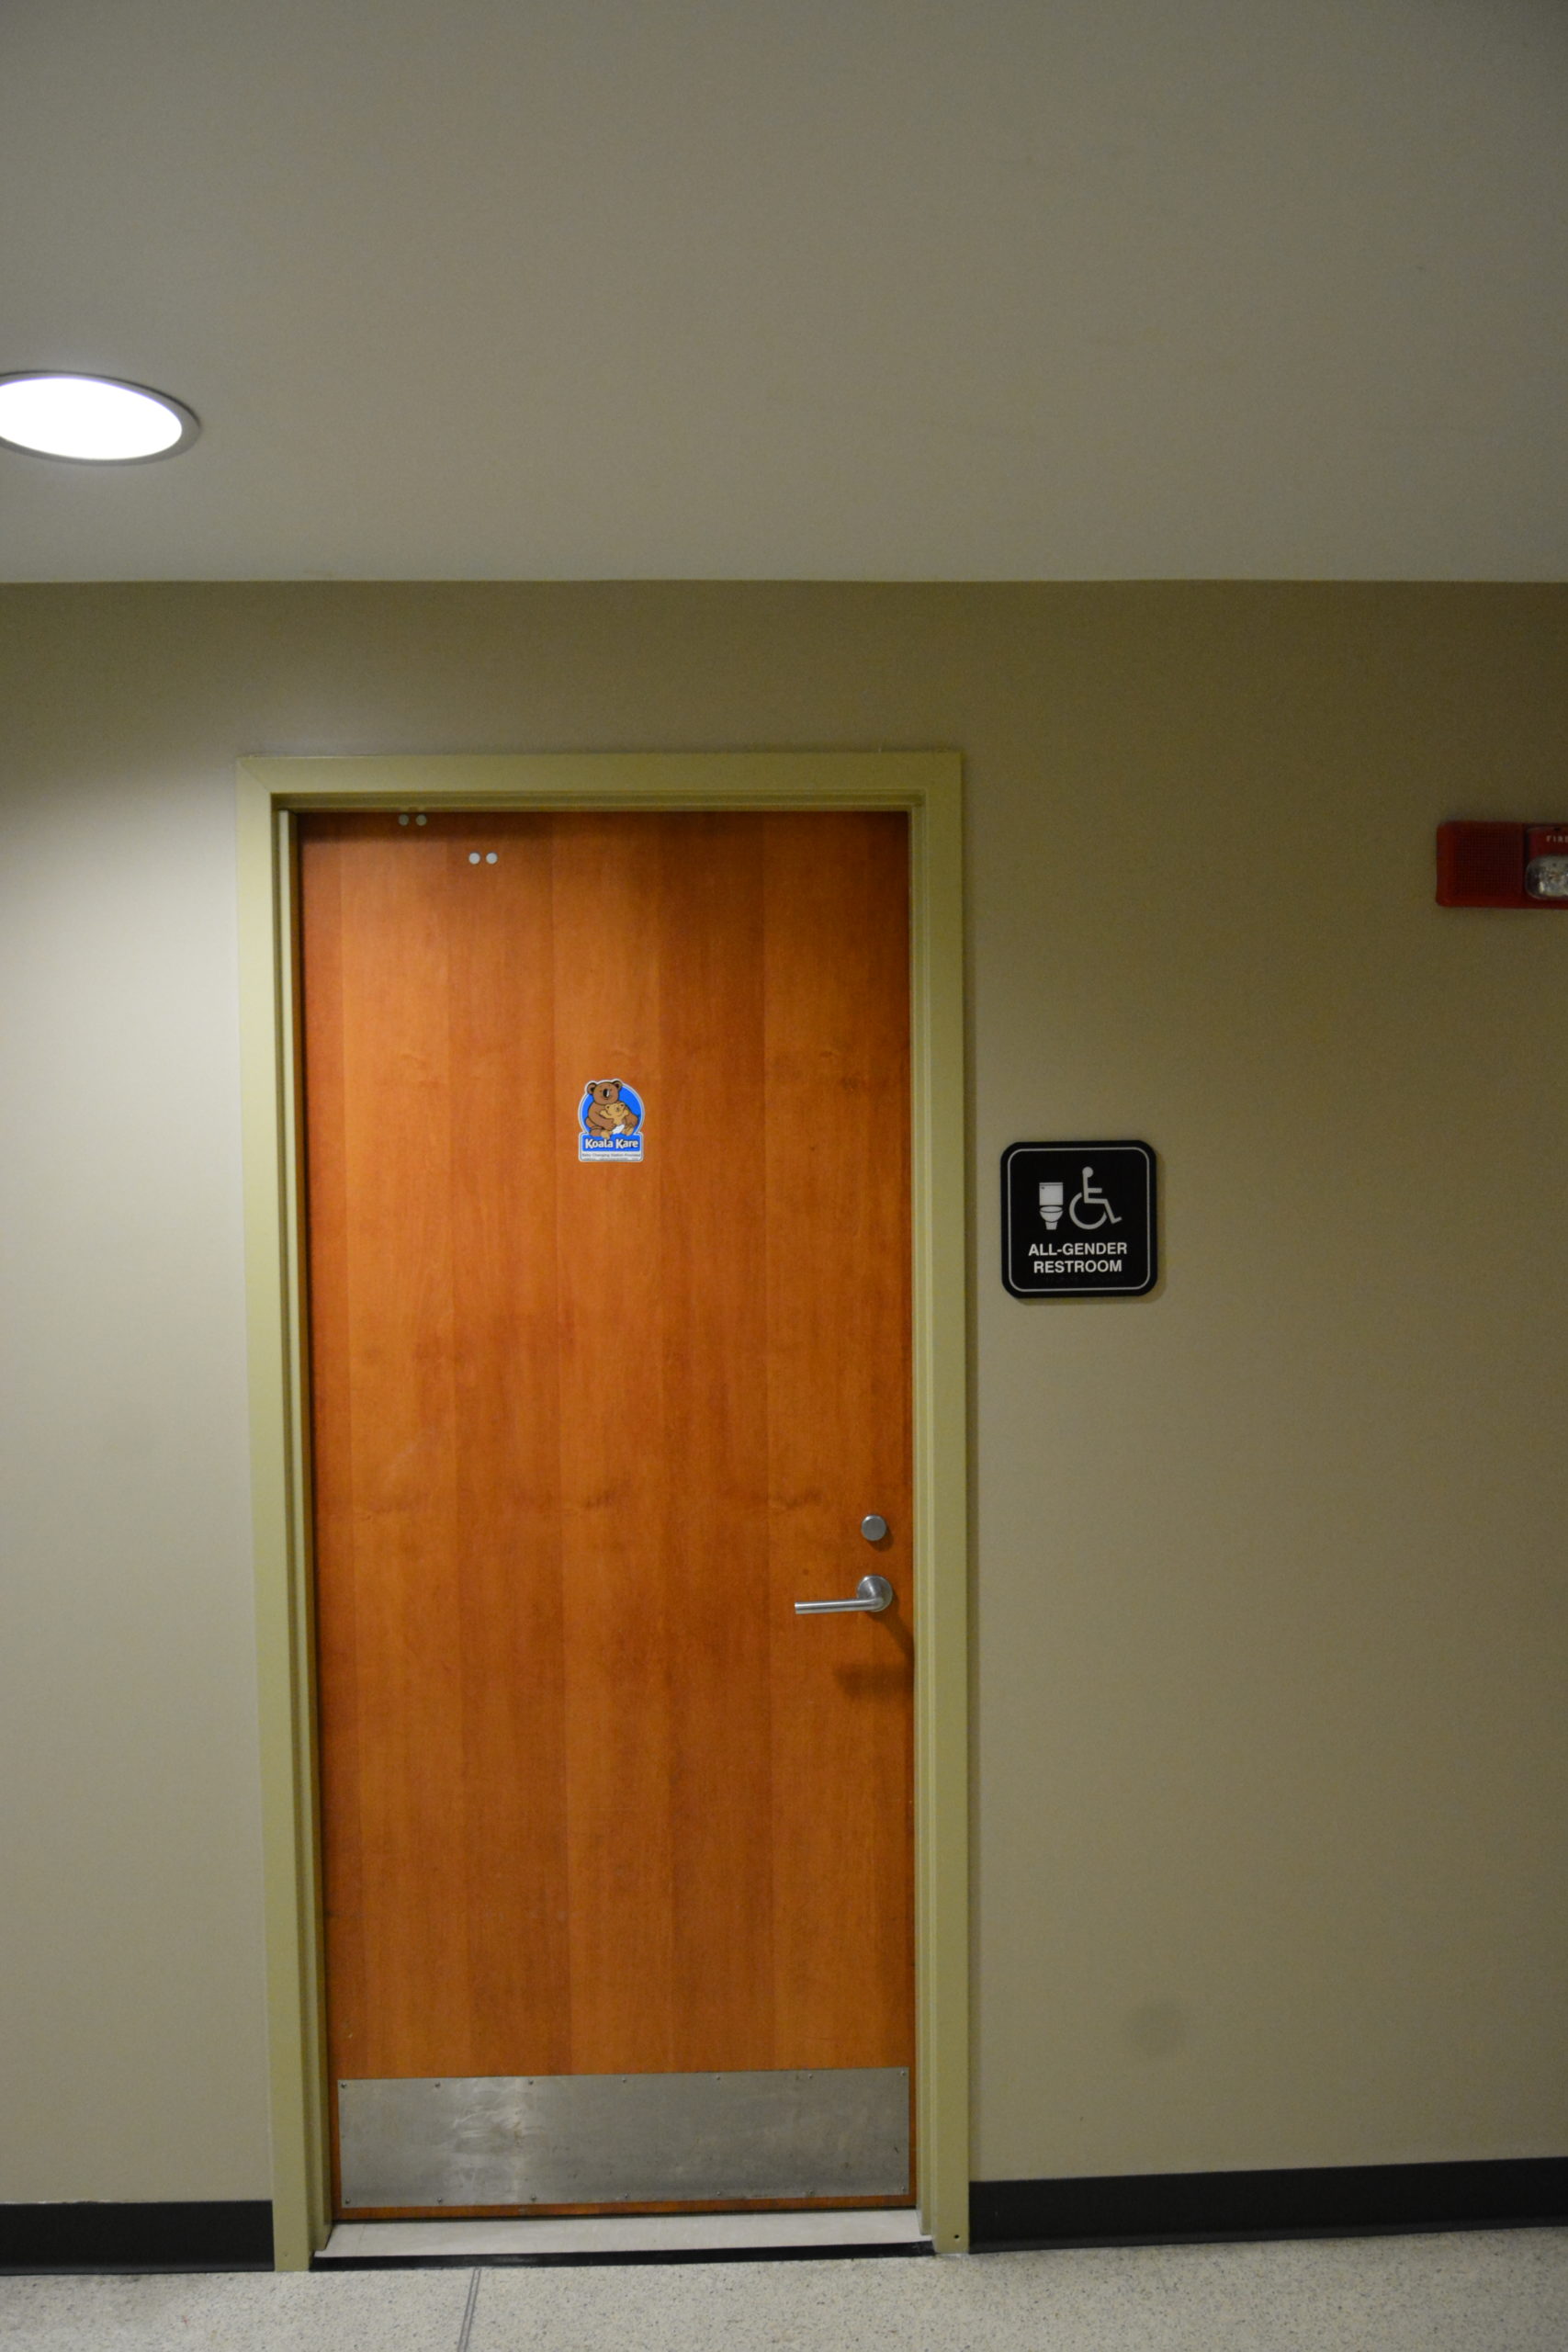 All-gender bathroom Library